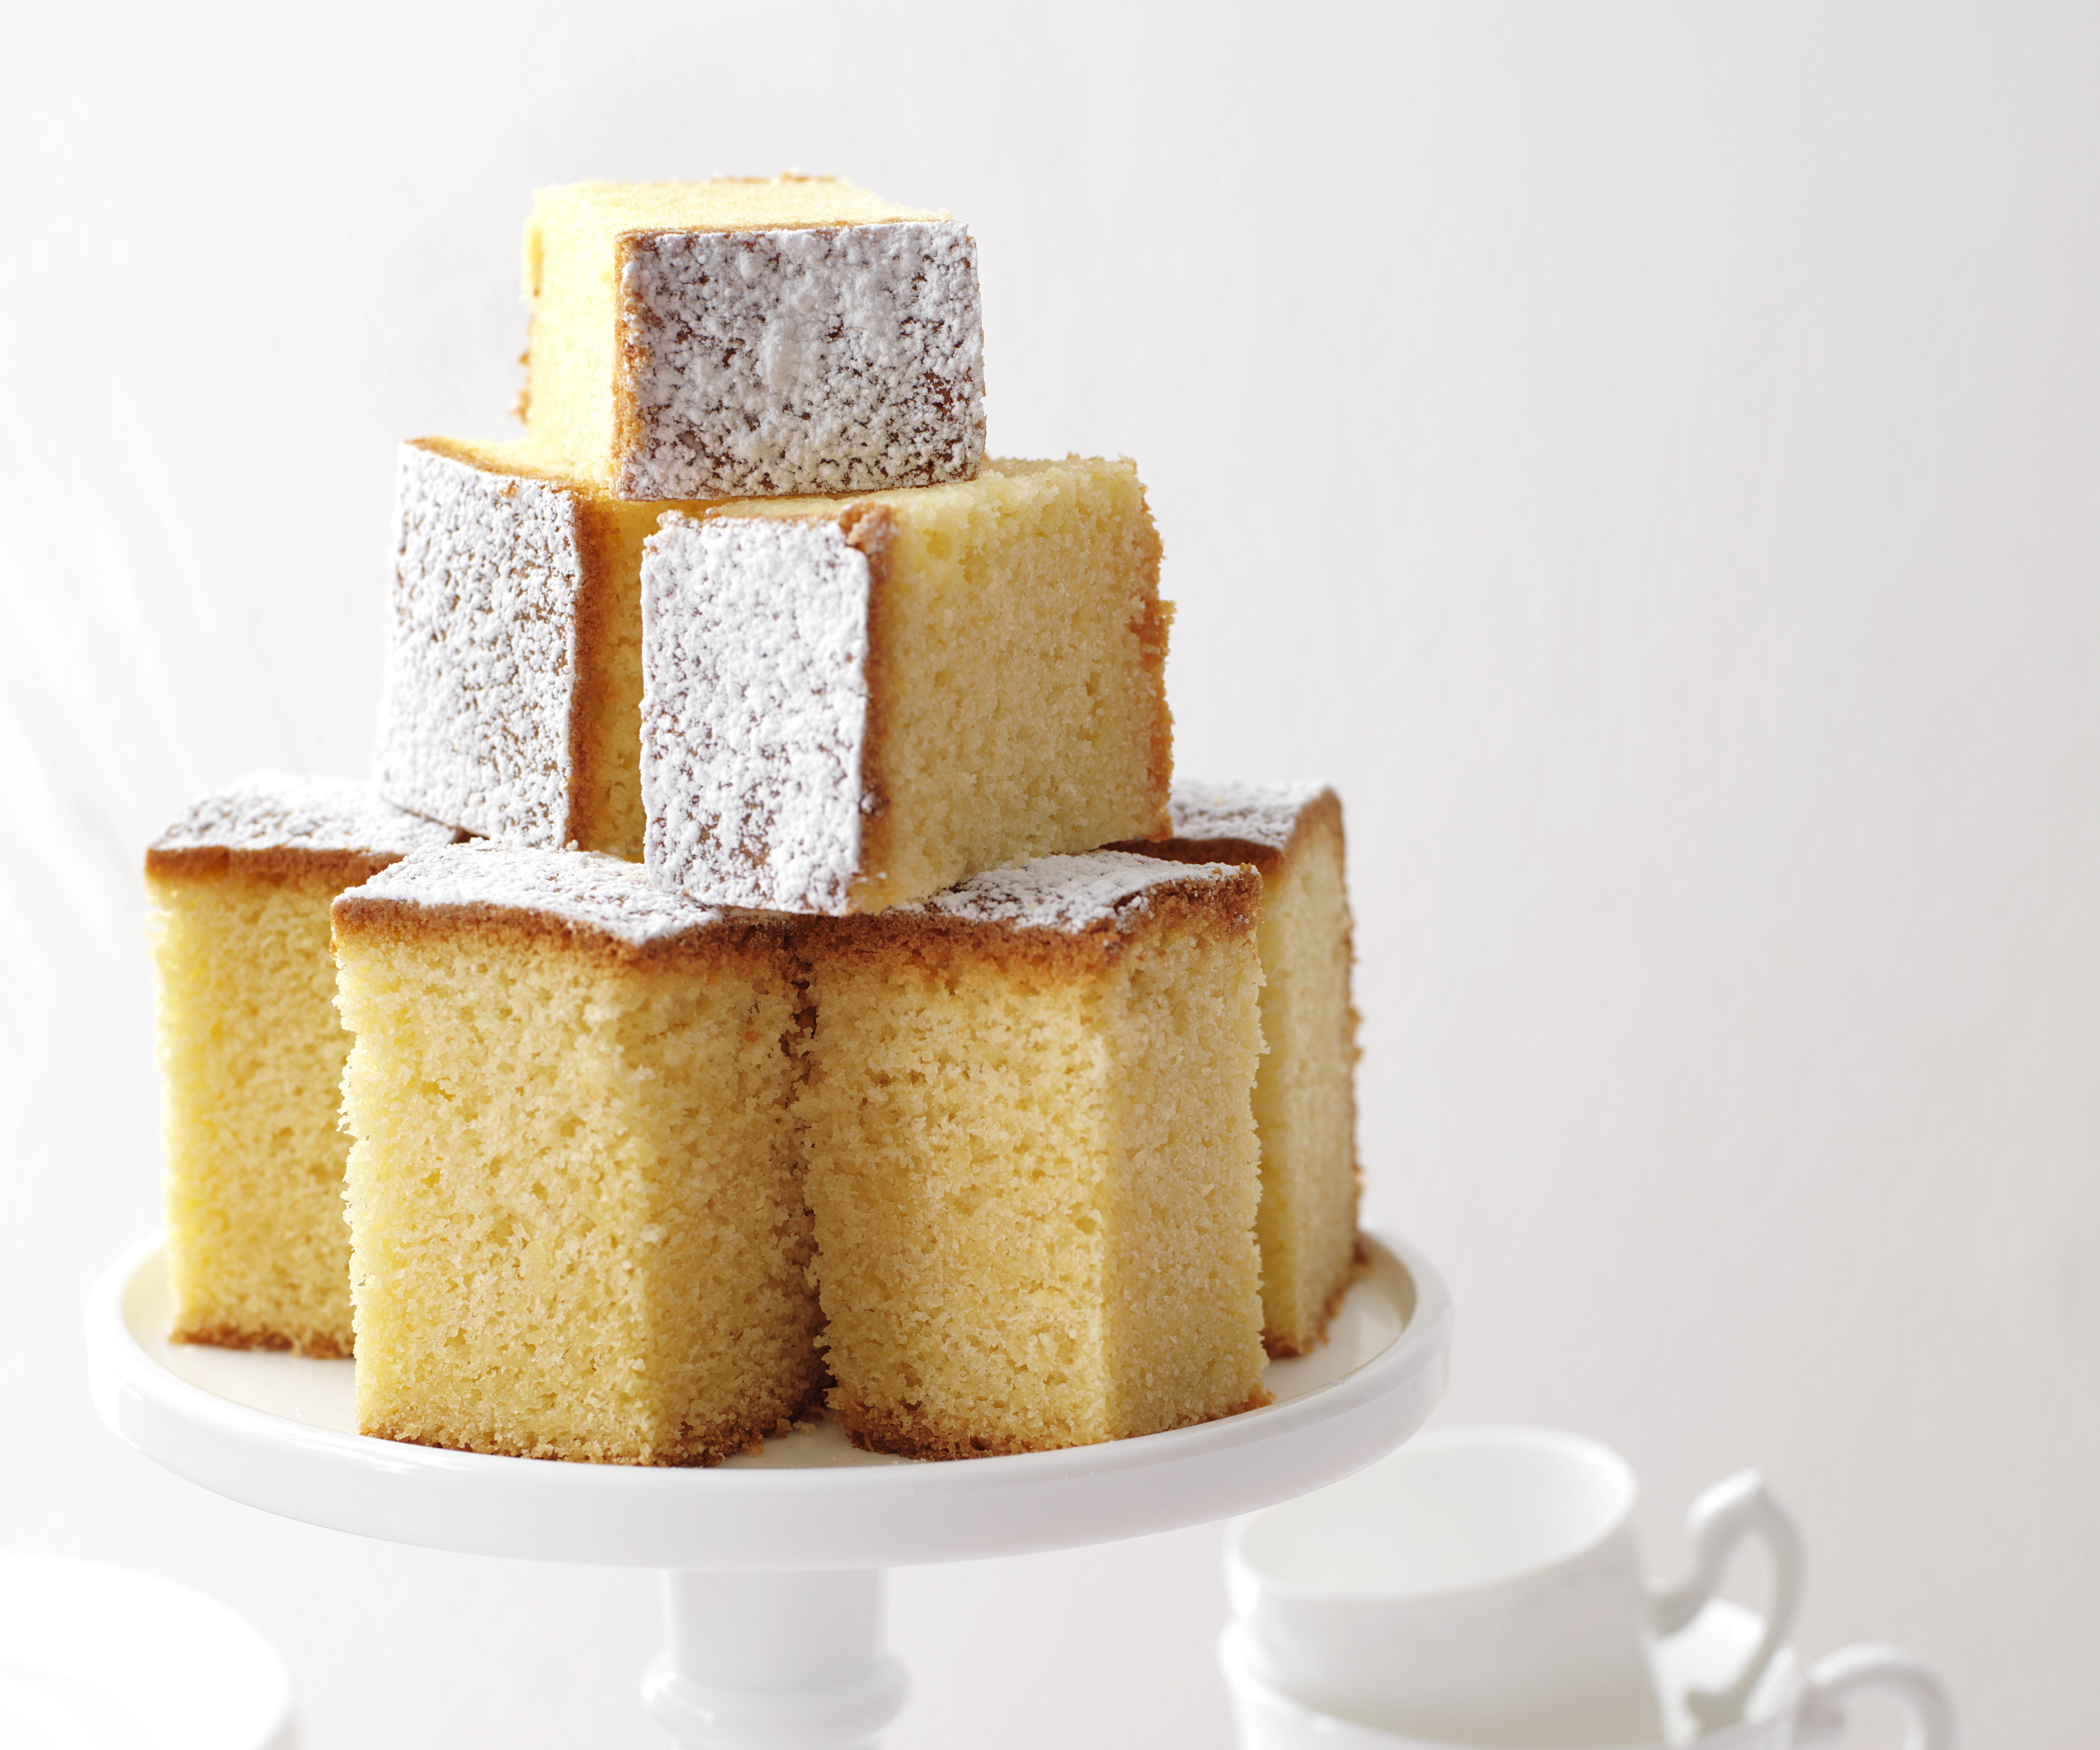 The BEST Vanilla Cake Recipe (Easy and Versatile!) - The Flavor Bender